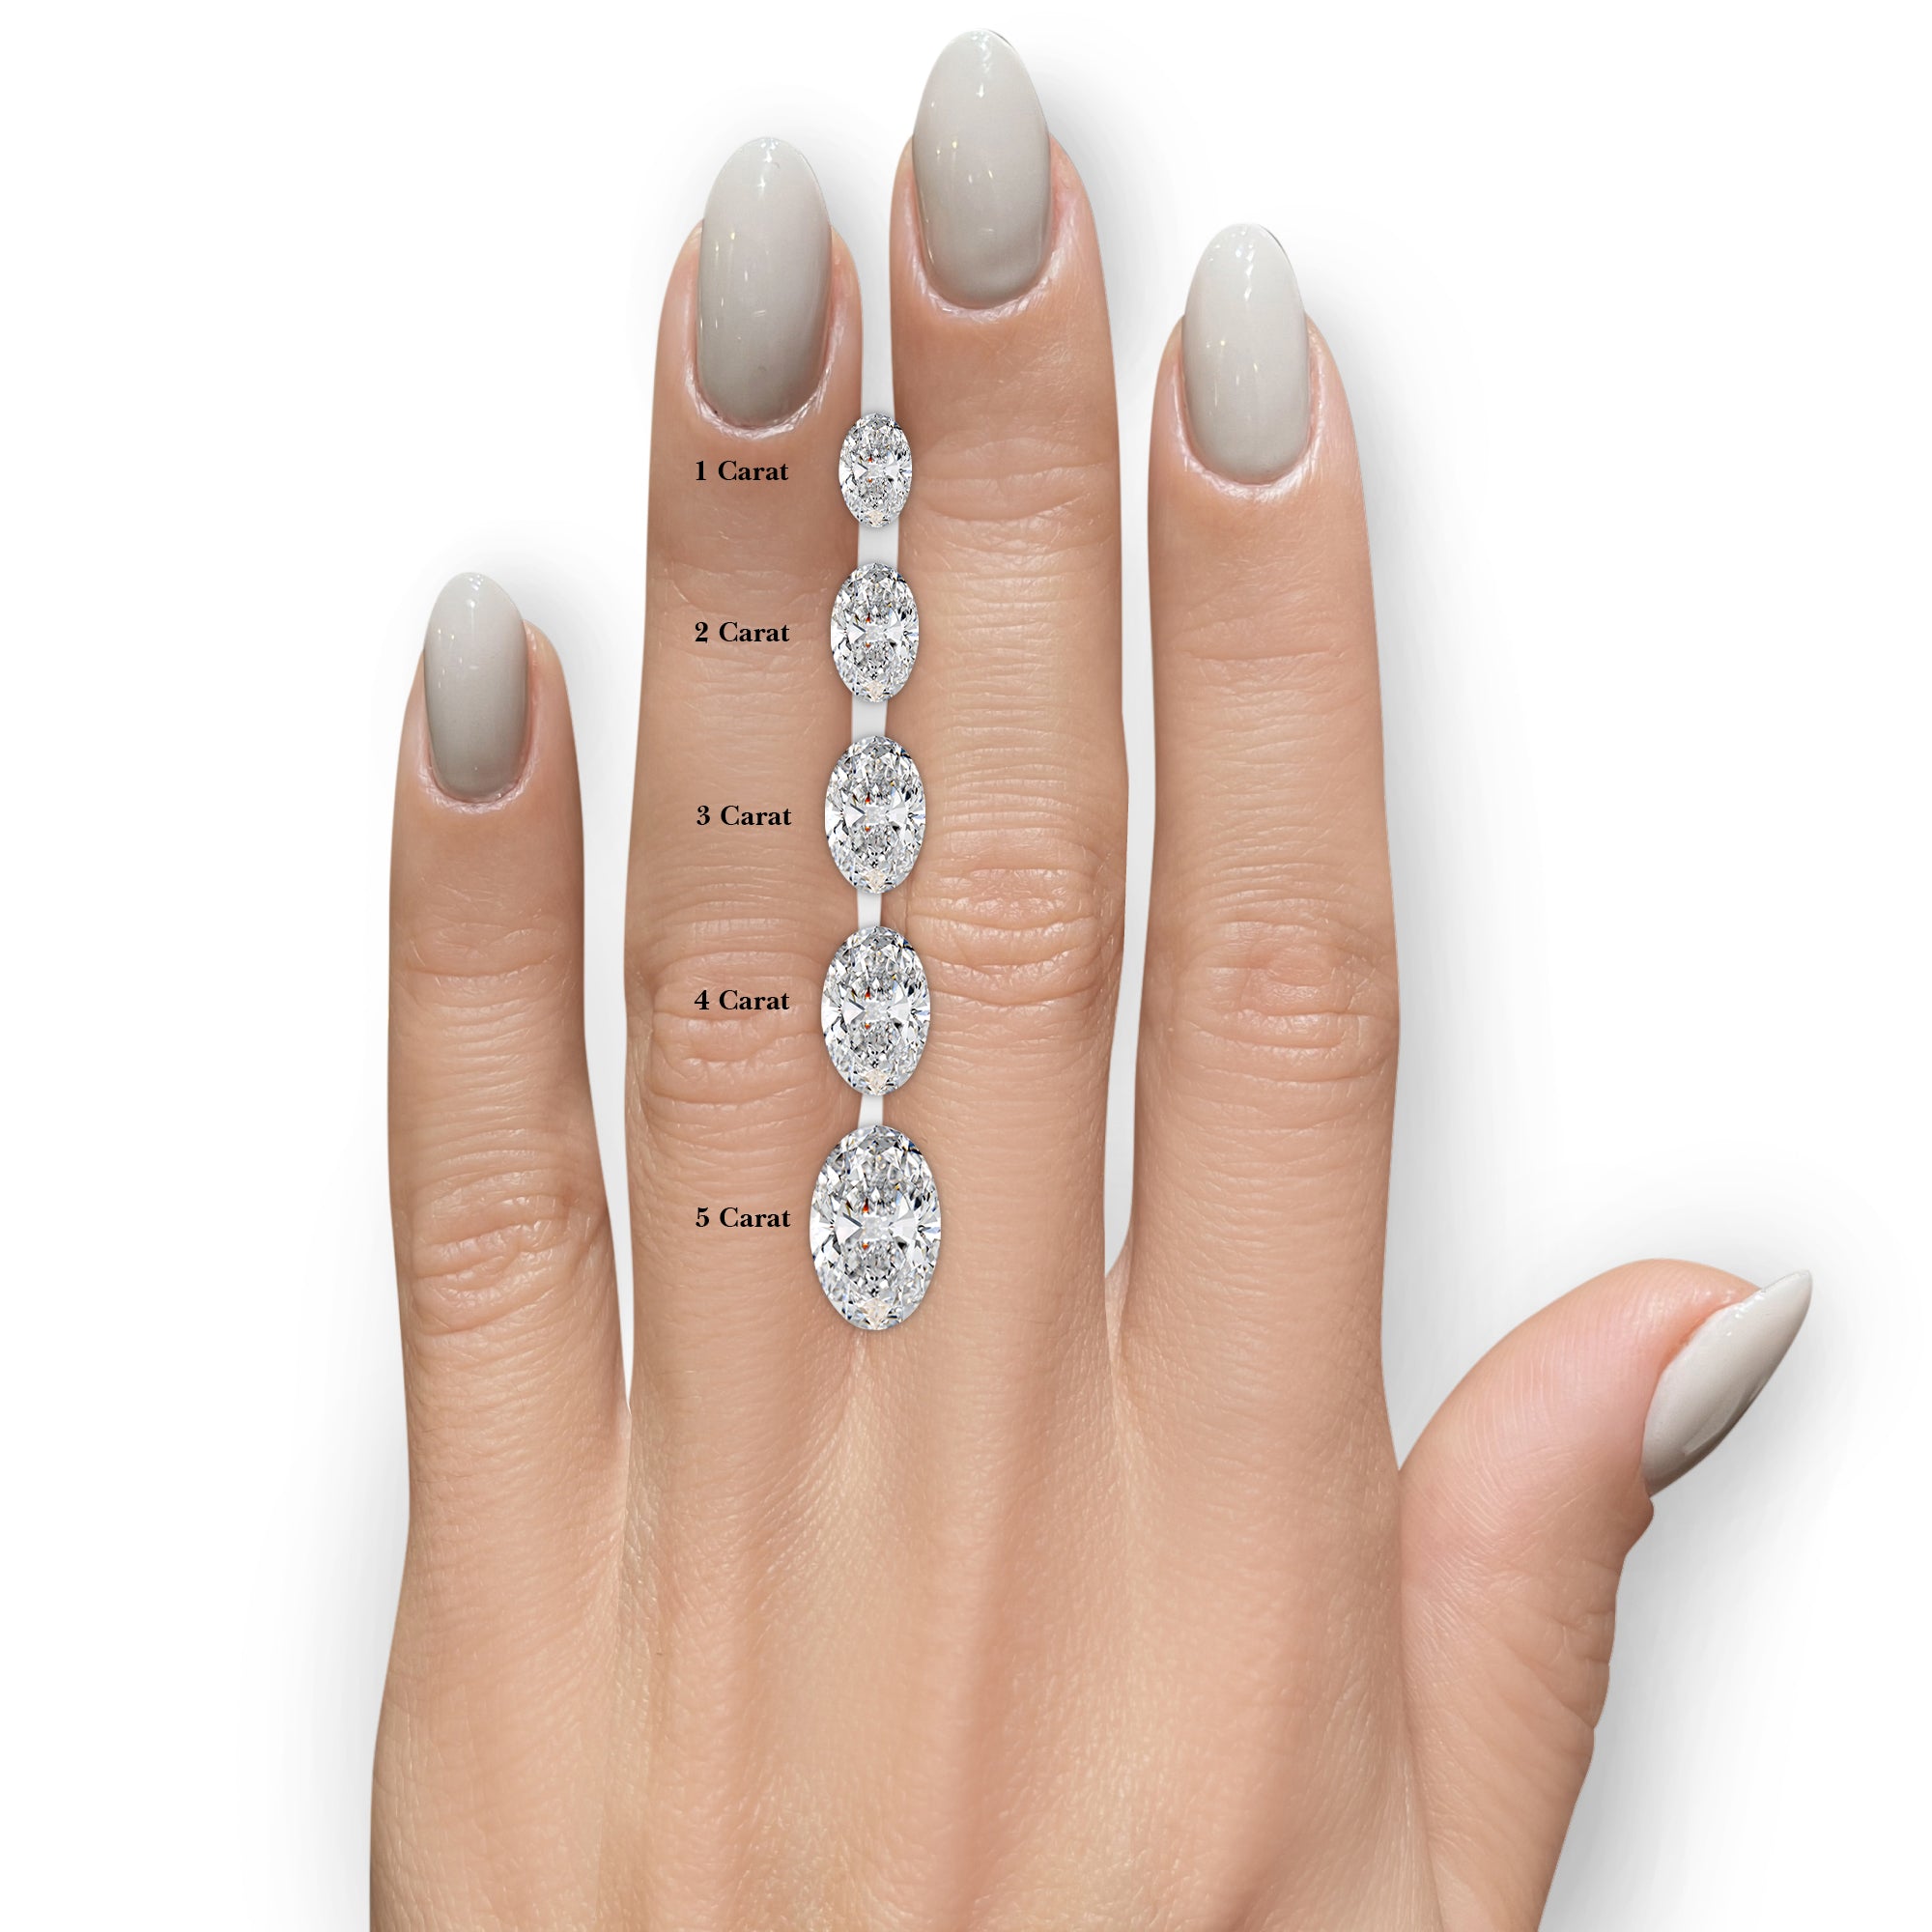 Bell Diamond Engagement Ring -Platinum